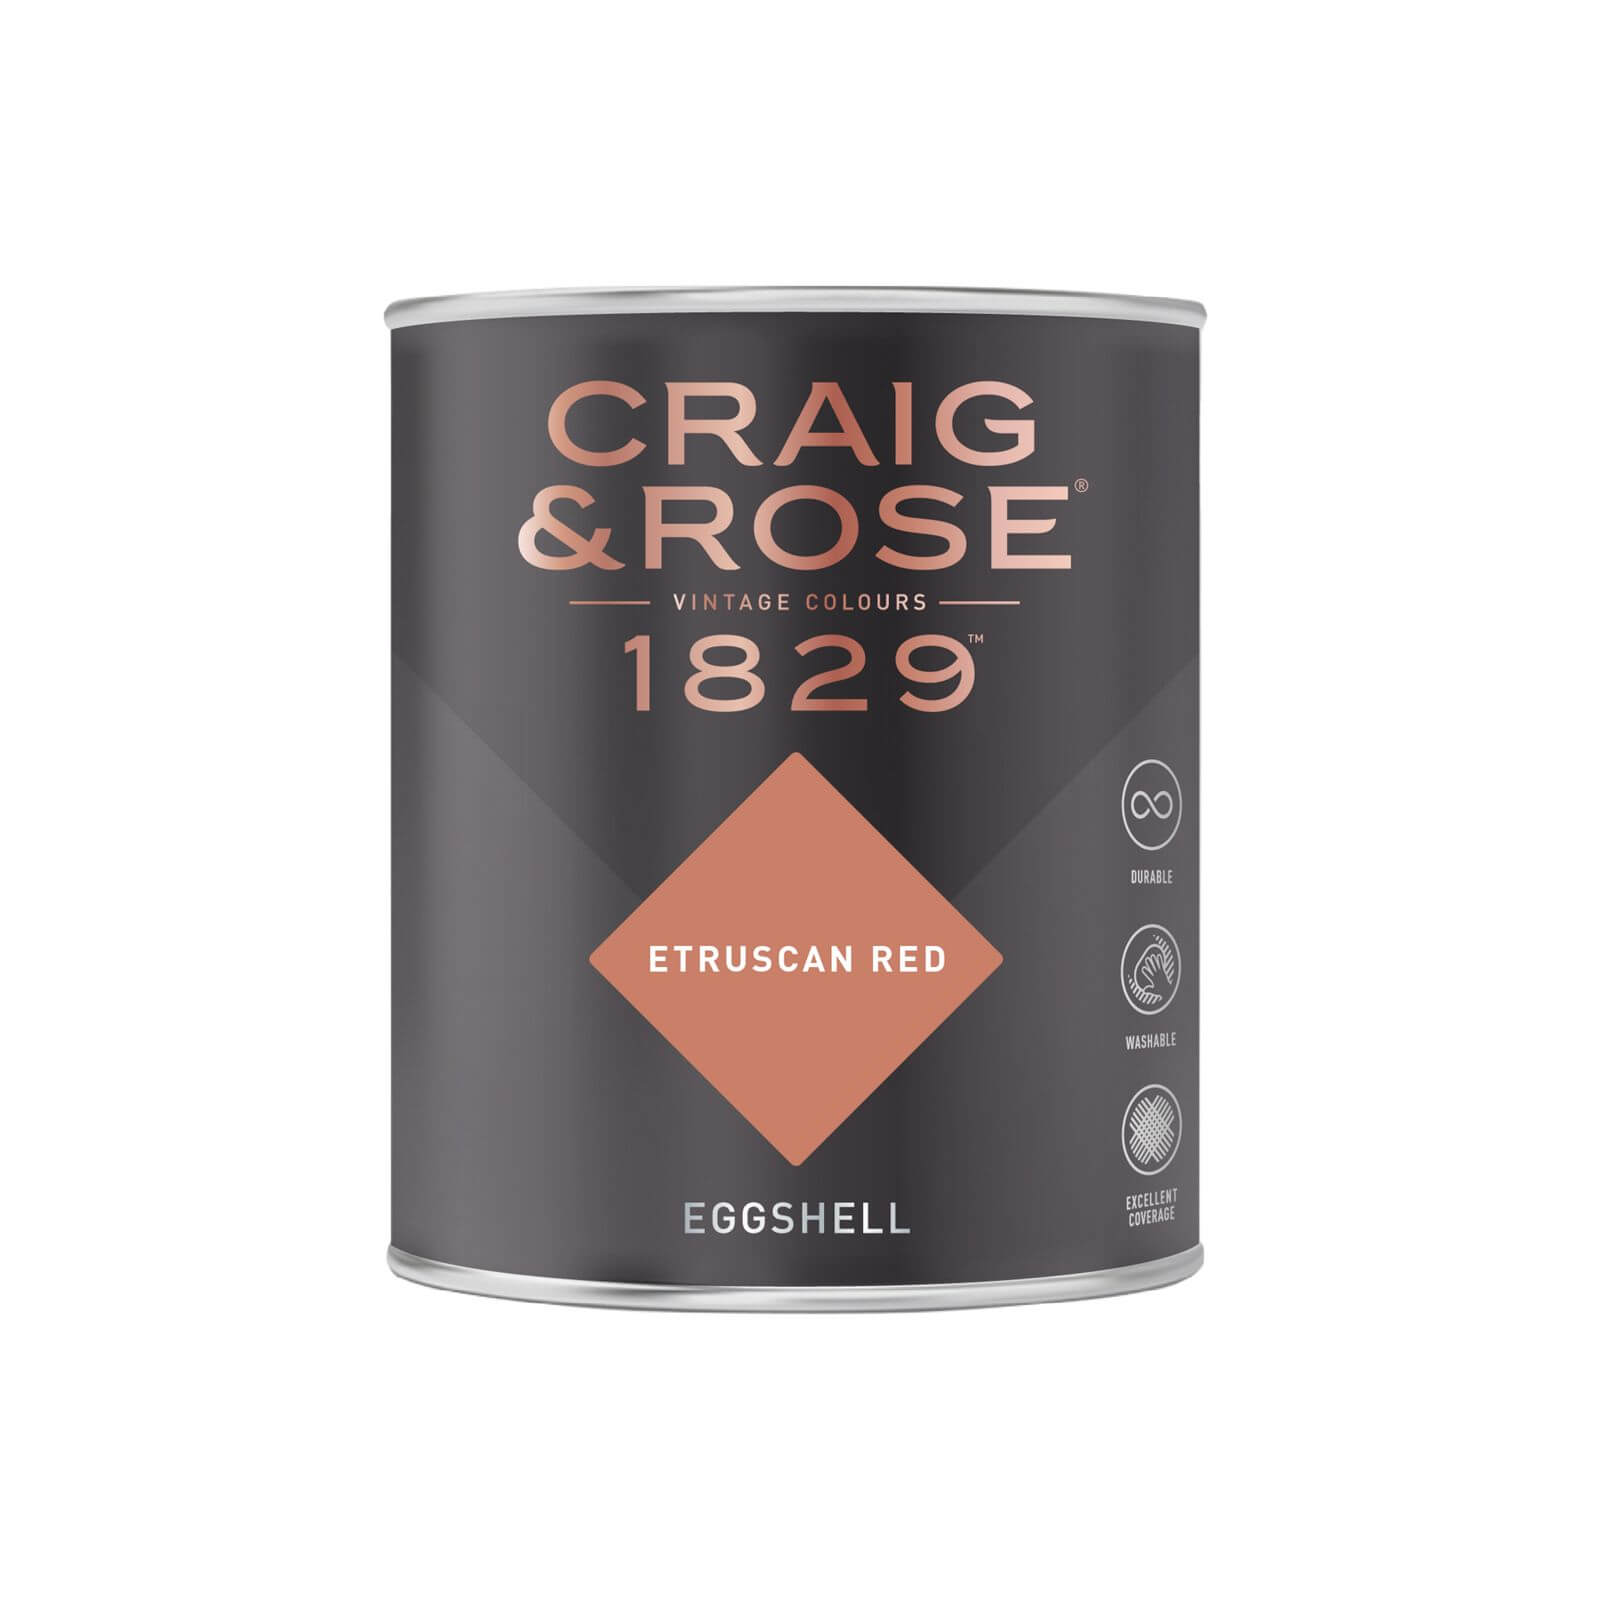 Craig & Rose 1829 Eggshell Paint Etruscan Red - 750ml